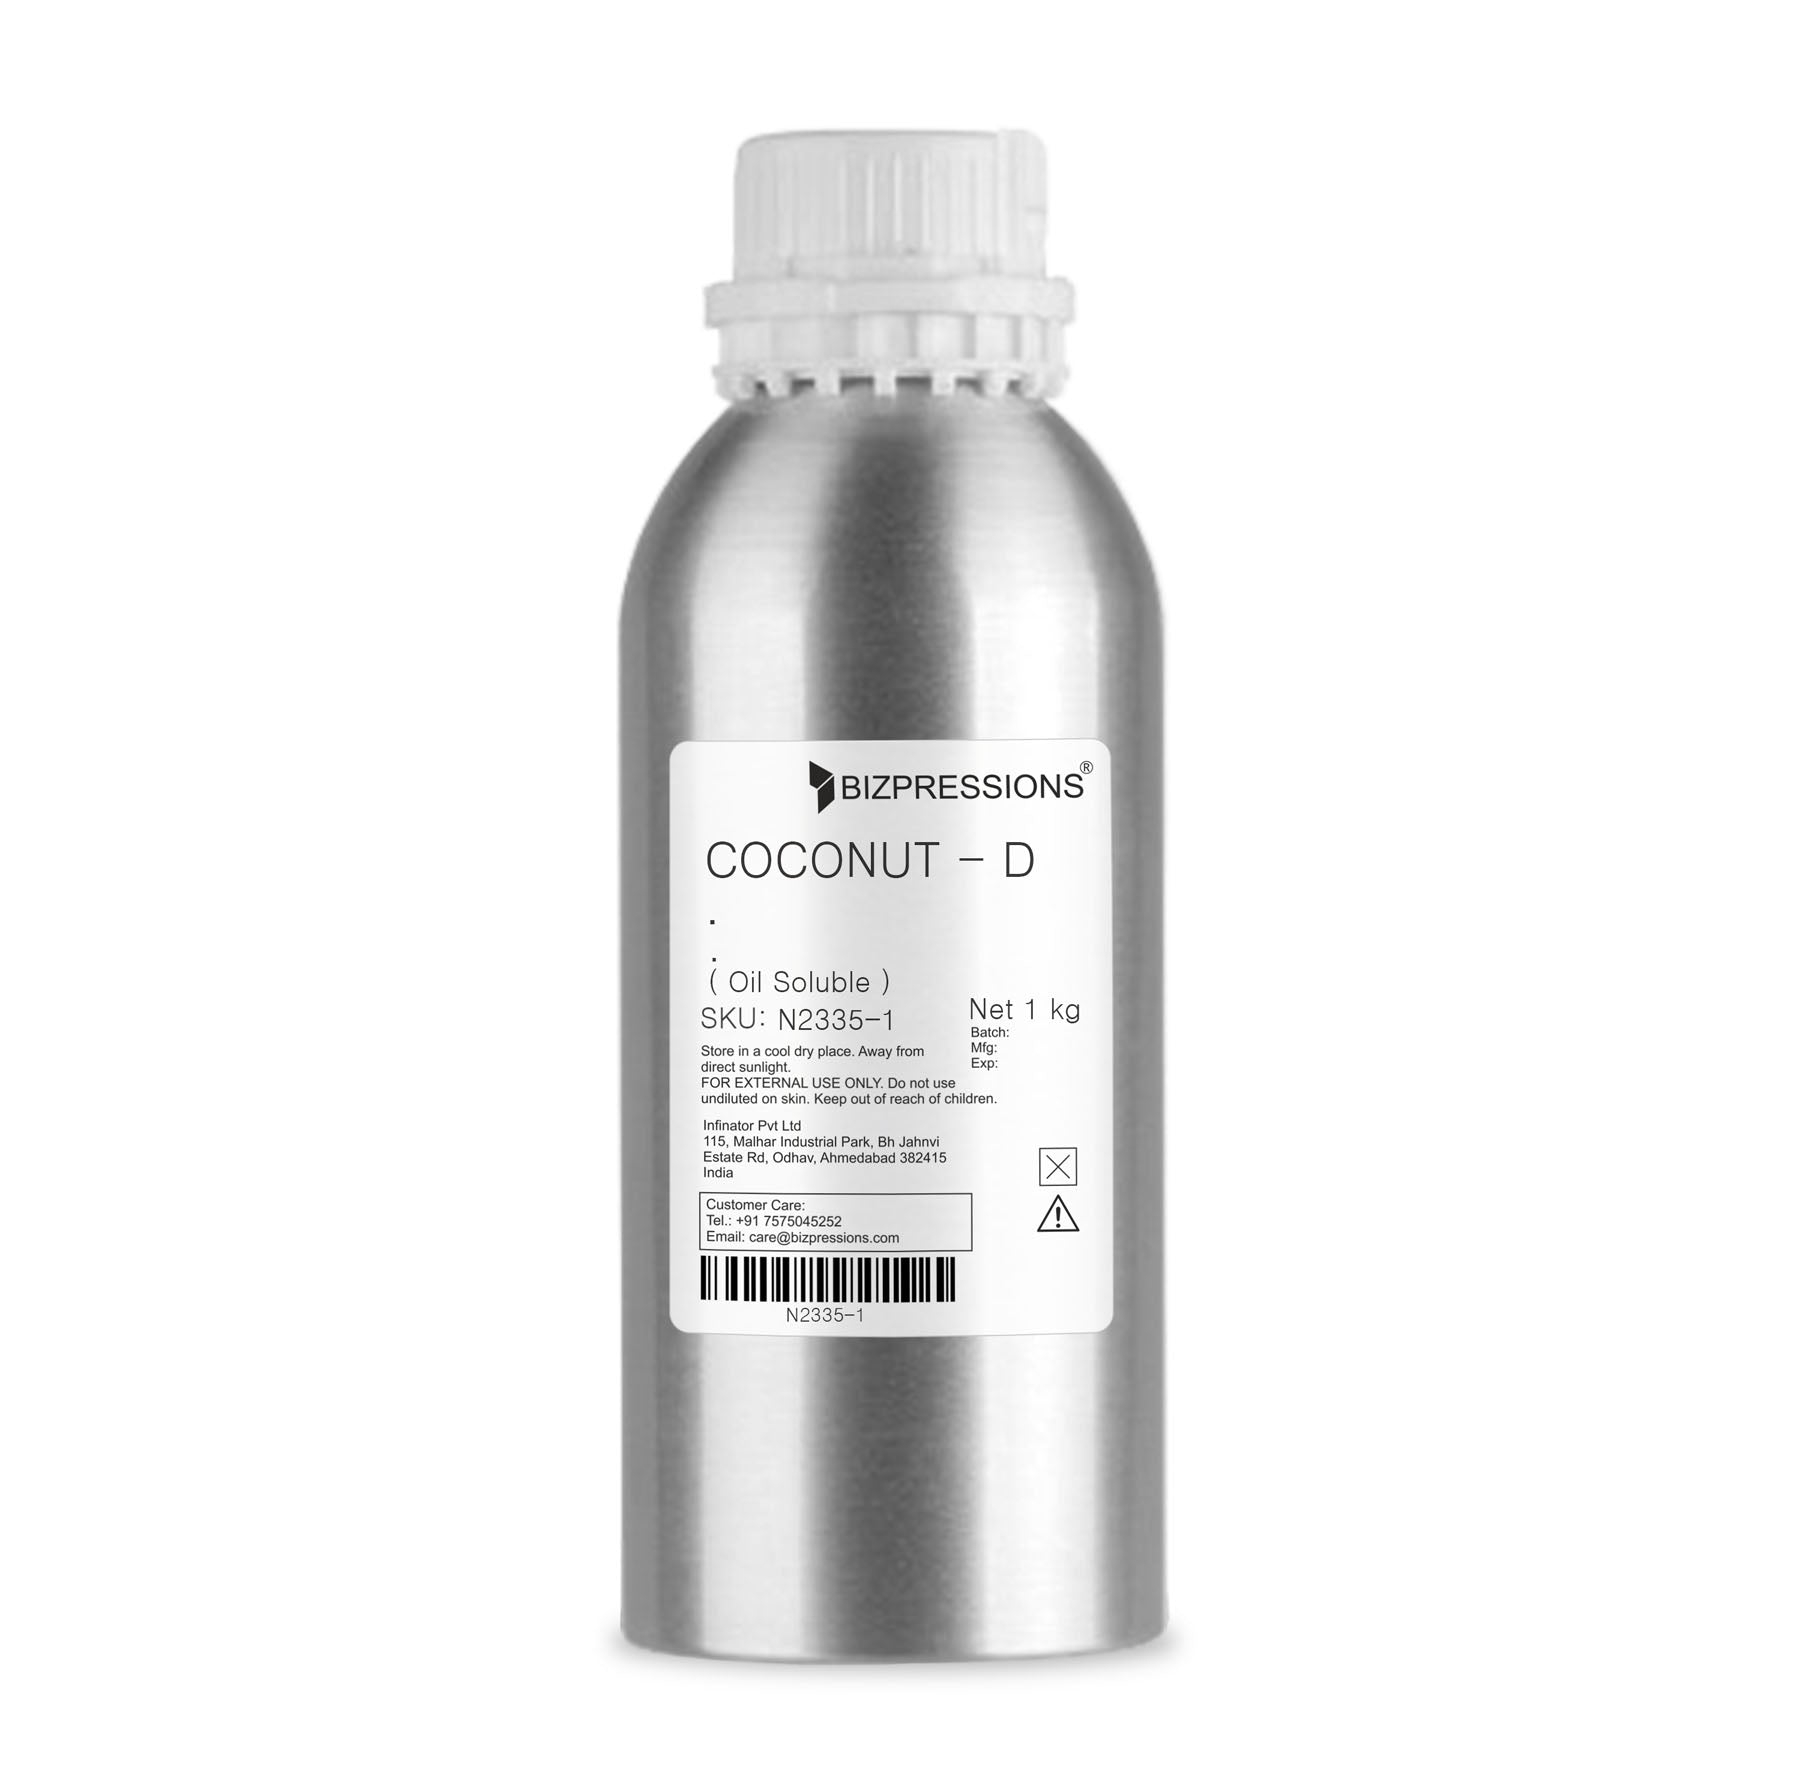 COCONUT - D - Fragrance ( Oil Soluble ) - 1 kg